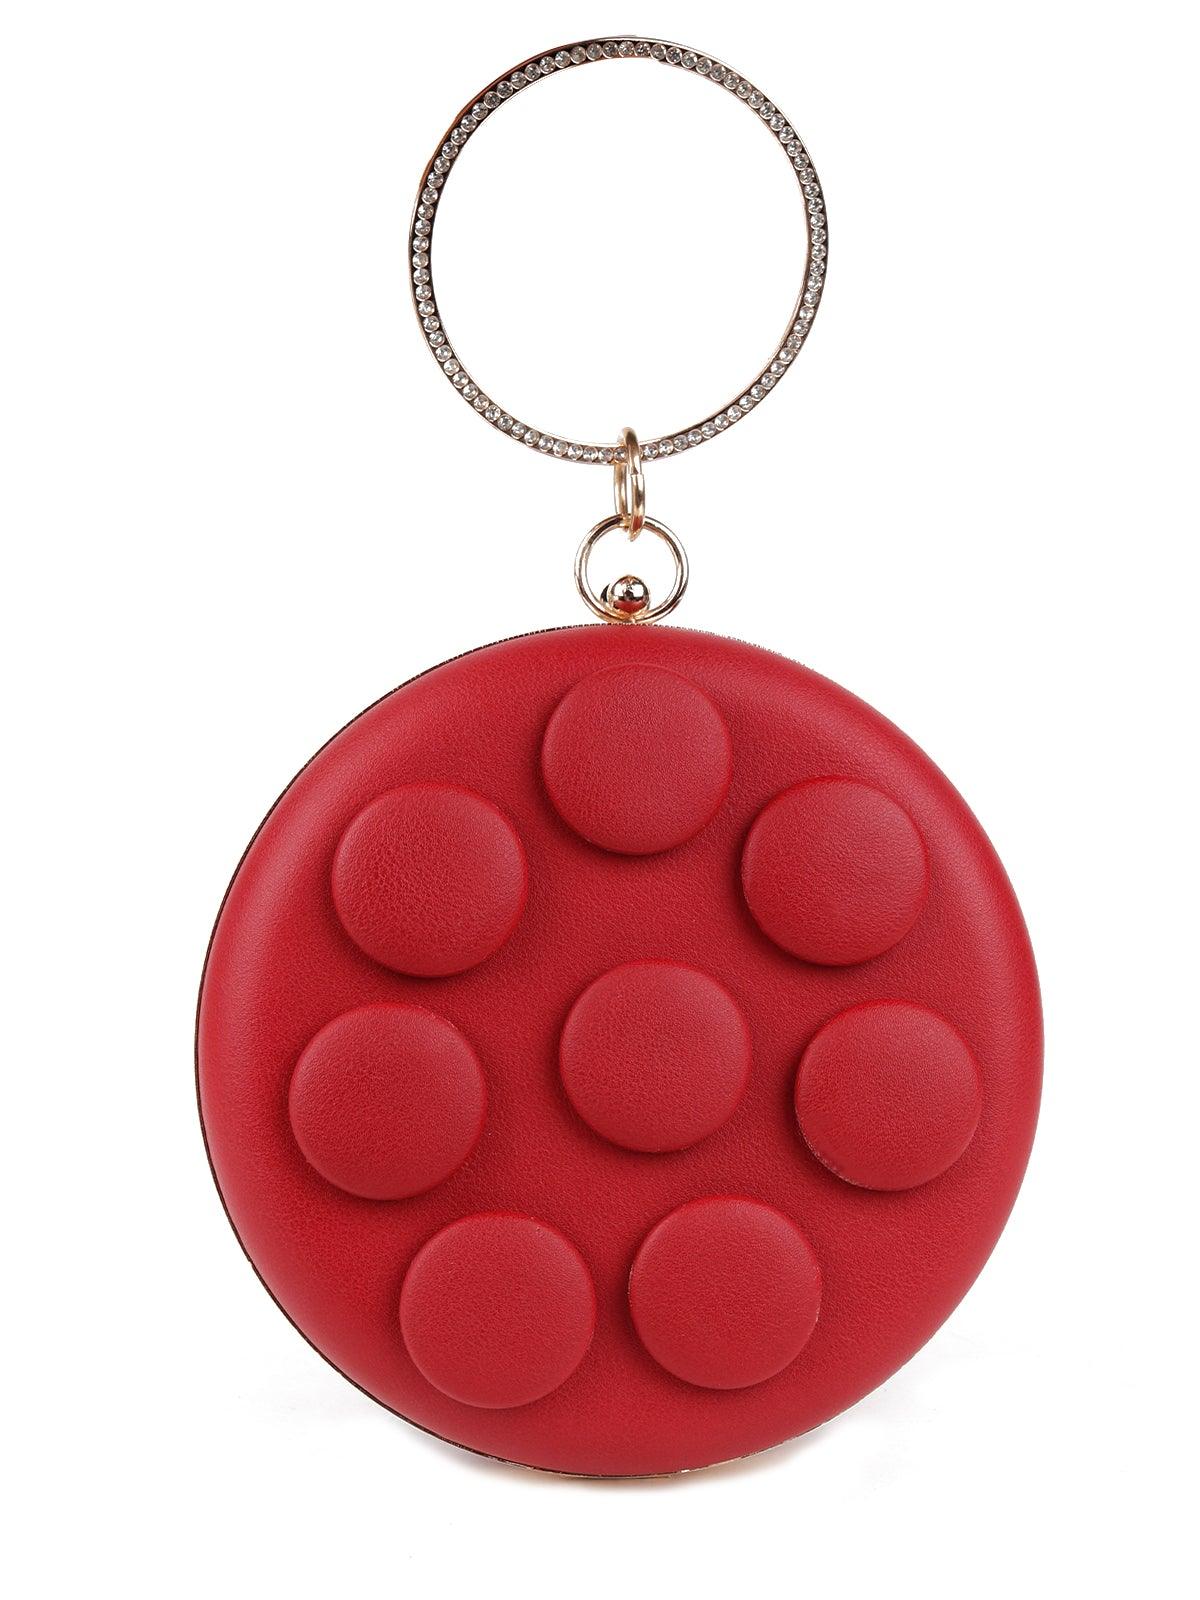 Rubbywoo red solid spherical bag. - Odette